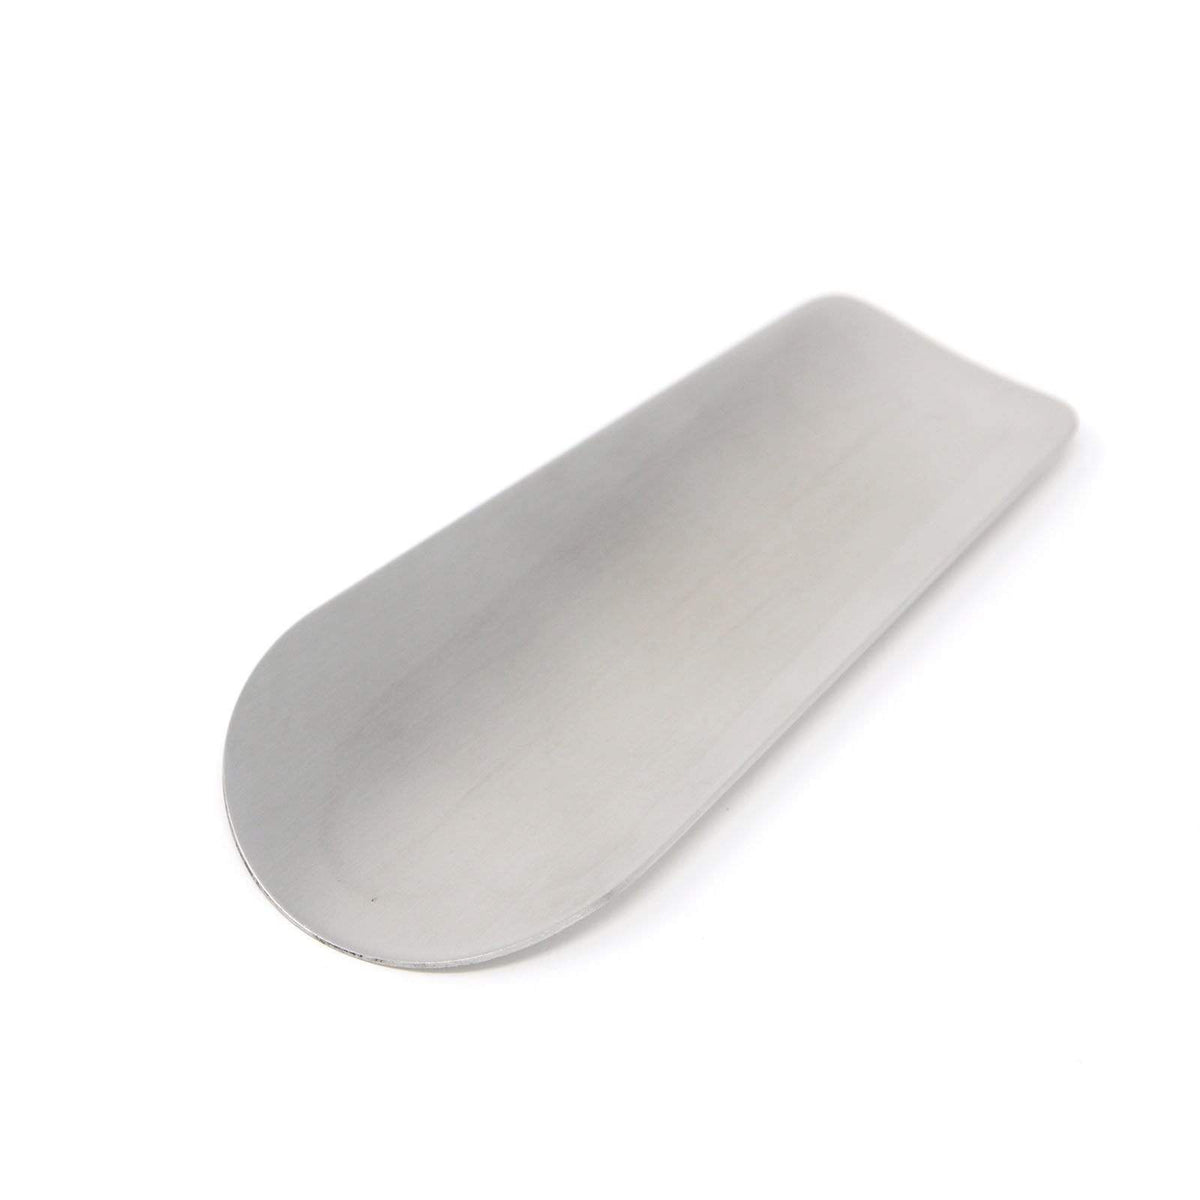 Asahi Stainless Steel Caddy Spoon Caddy Spoons